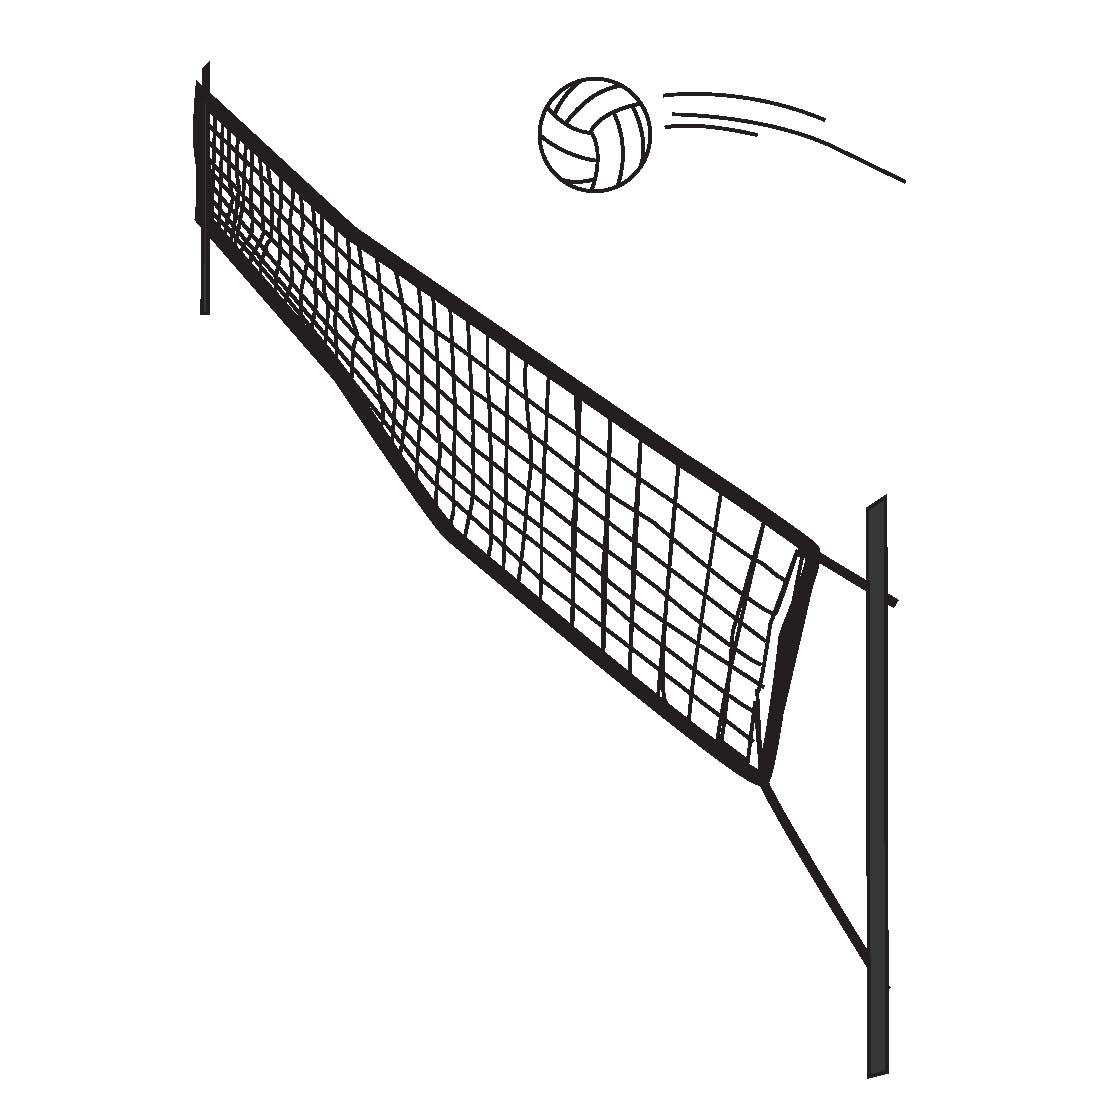  clipartlook. Clipart volleyball volleyball net